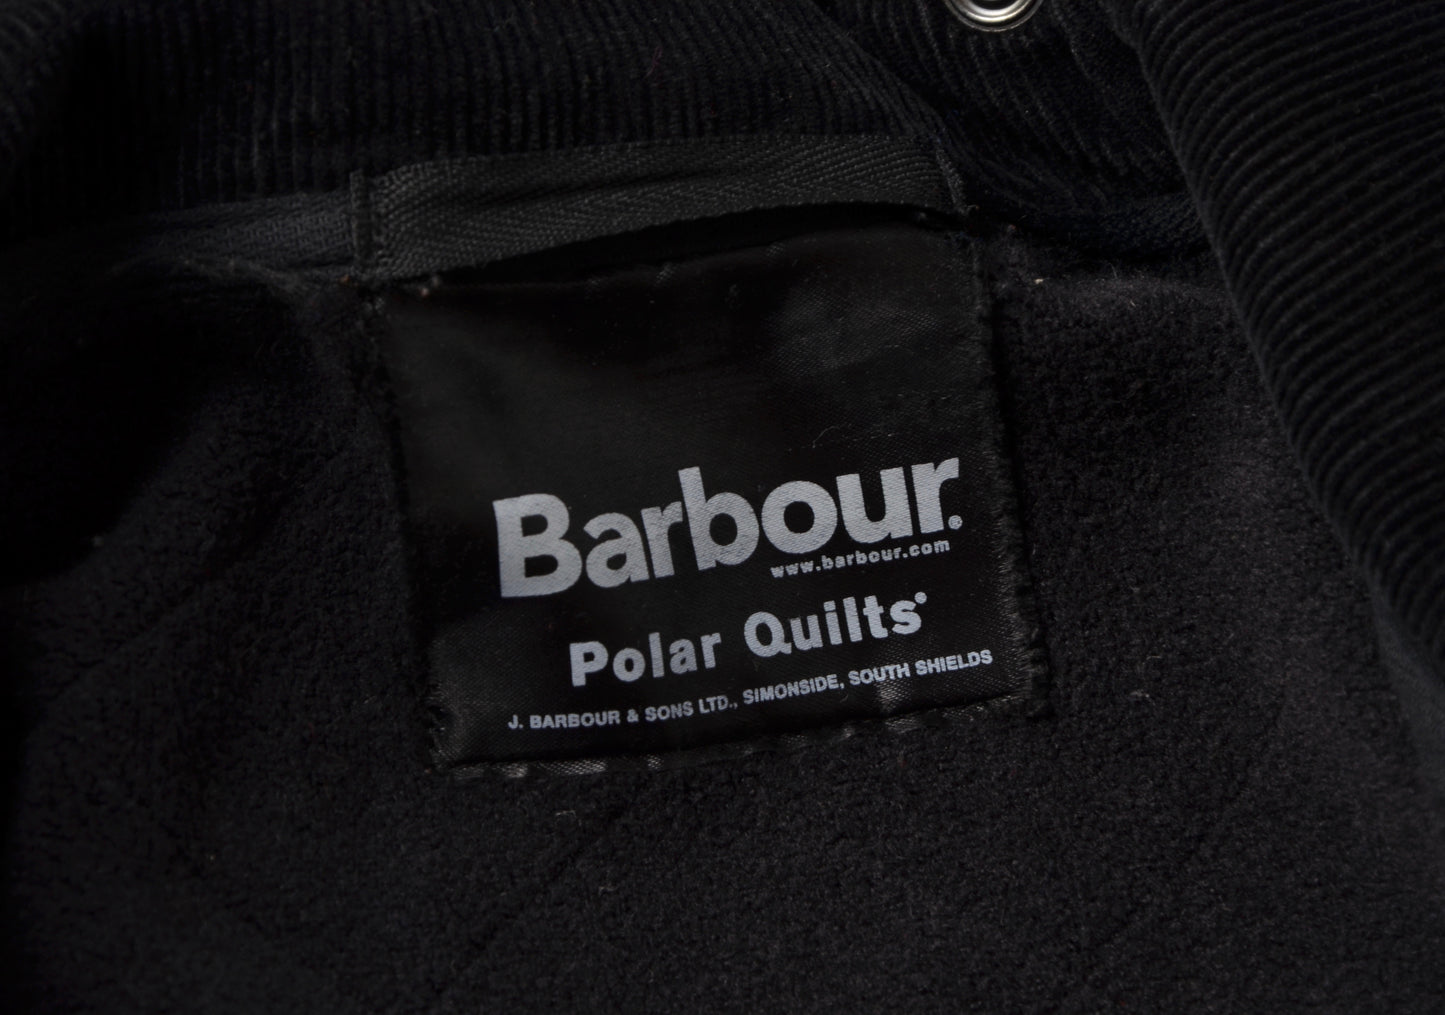 Barbour Polar Quilts Mantel Größe L – Schwarz